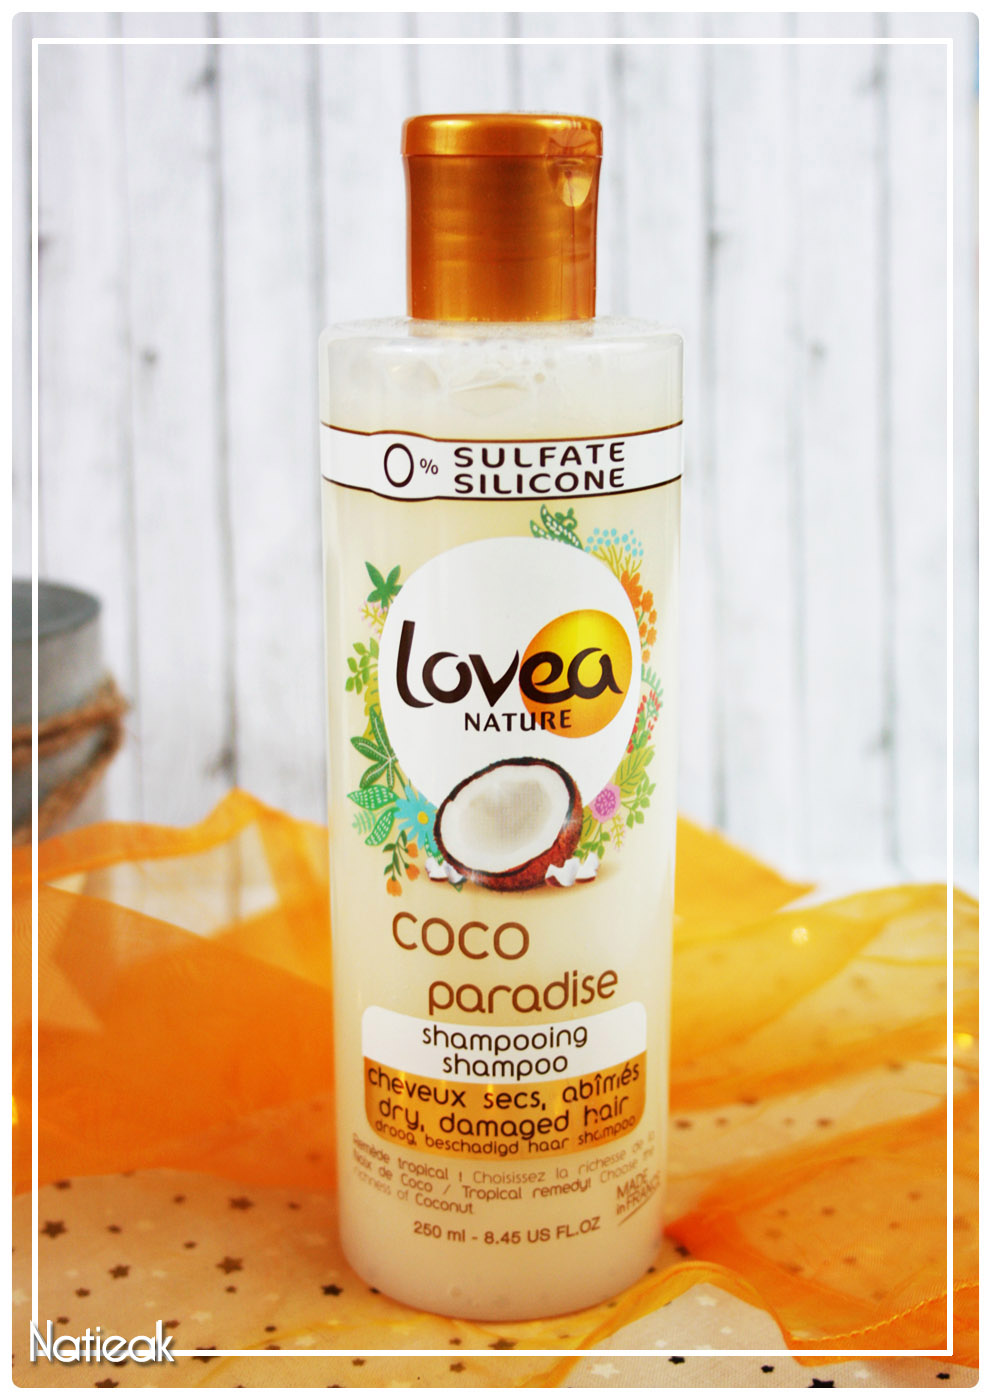 Shampoing  Coco paradise de Lovea Nature